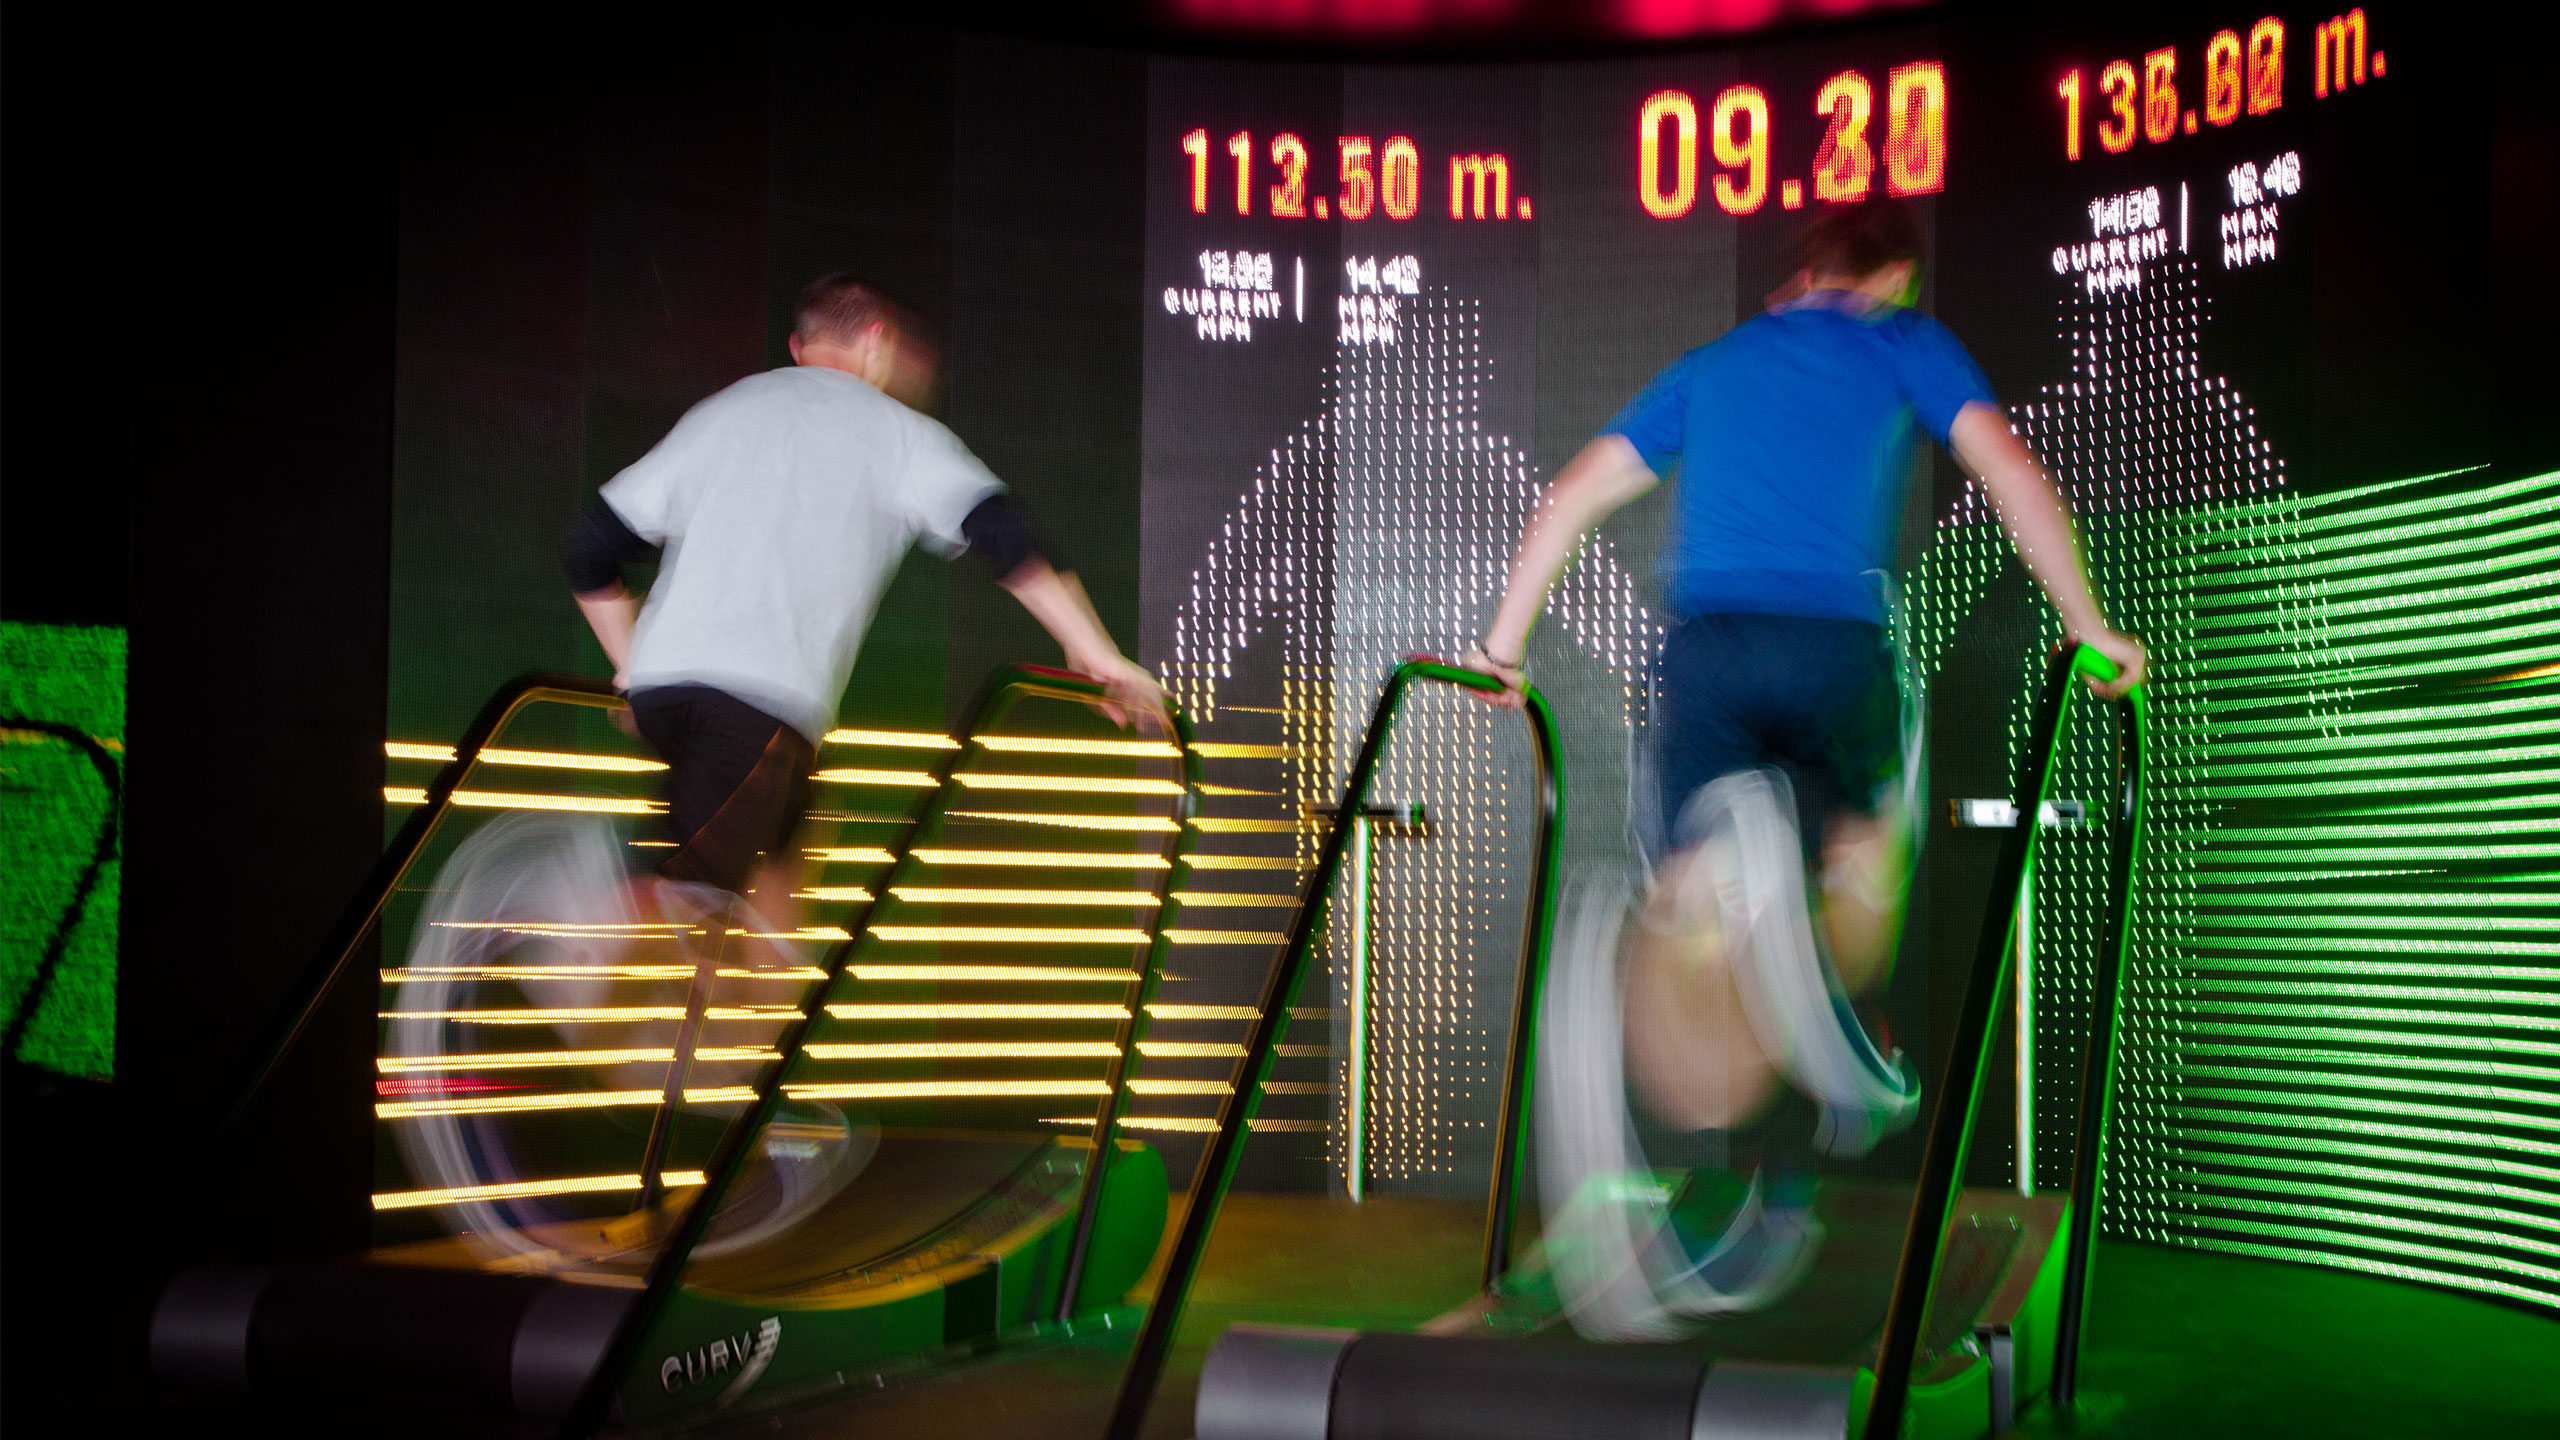 Treadmill race